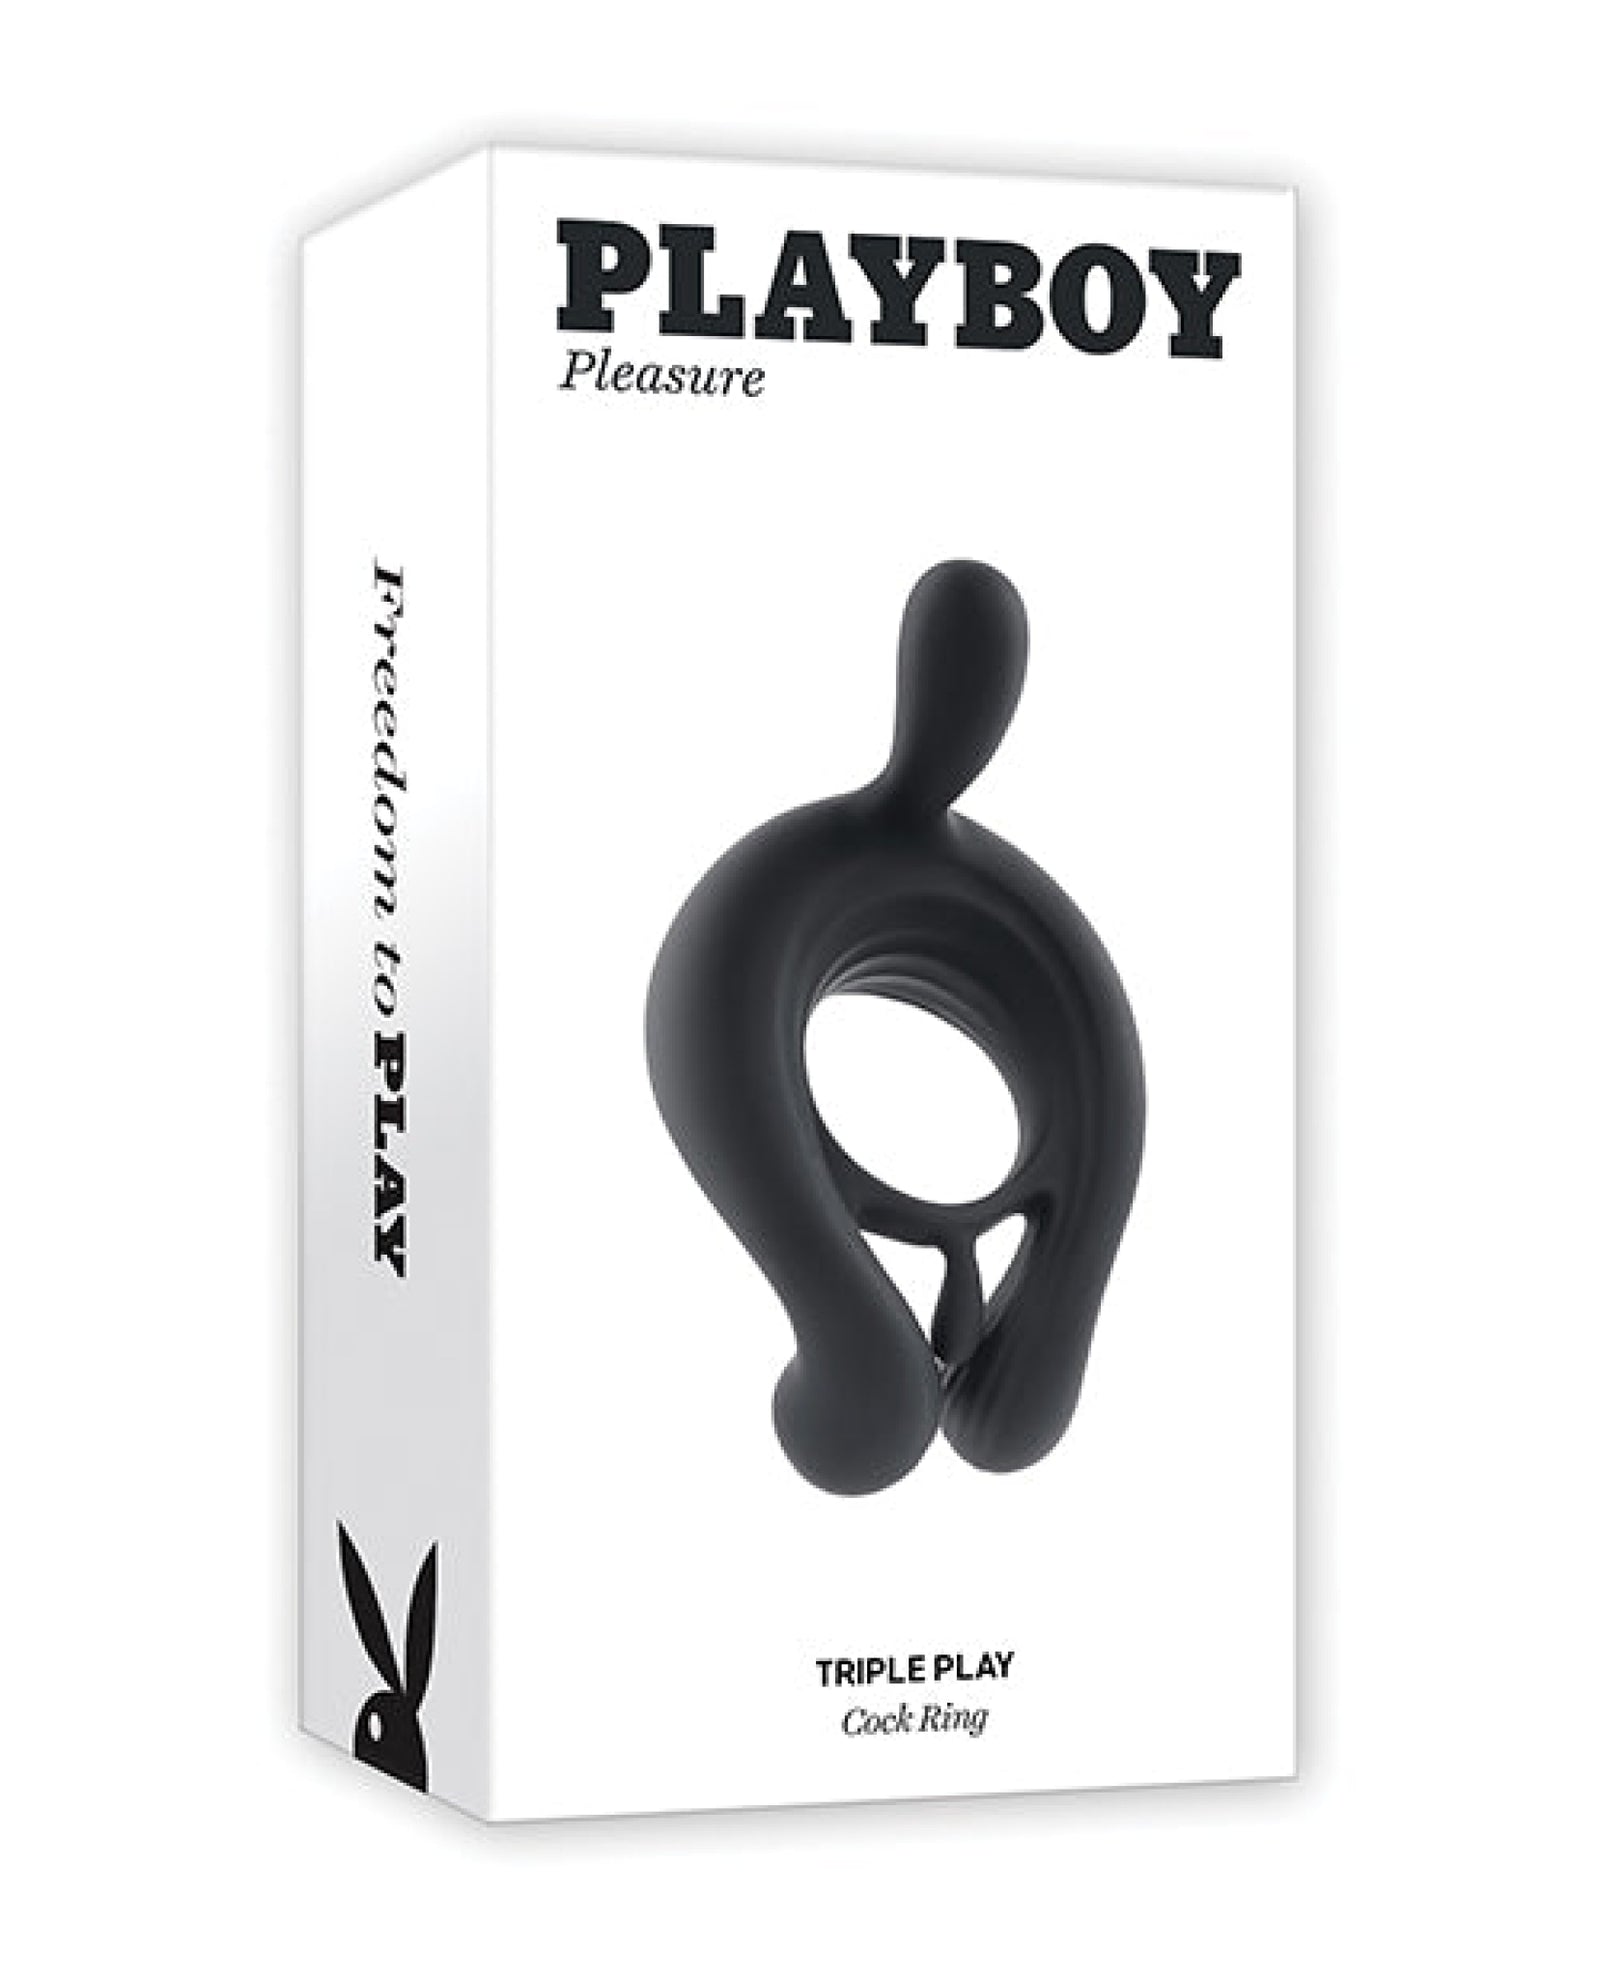 Playboy Pleasure Triple Play Cock Ring  - 2 Am Playboy